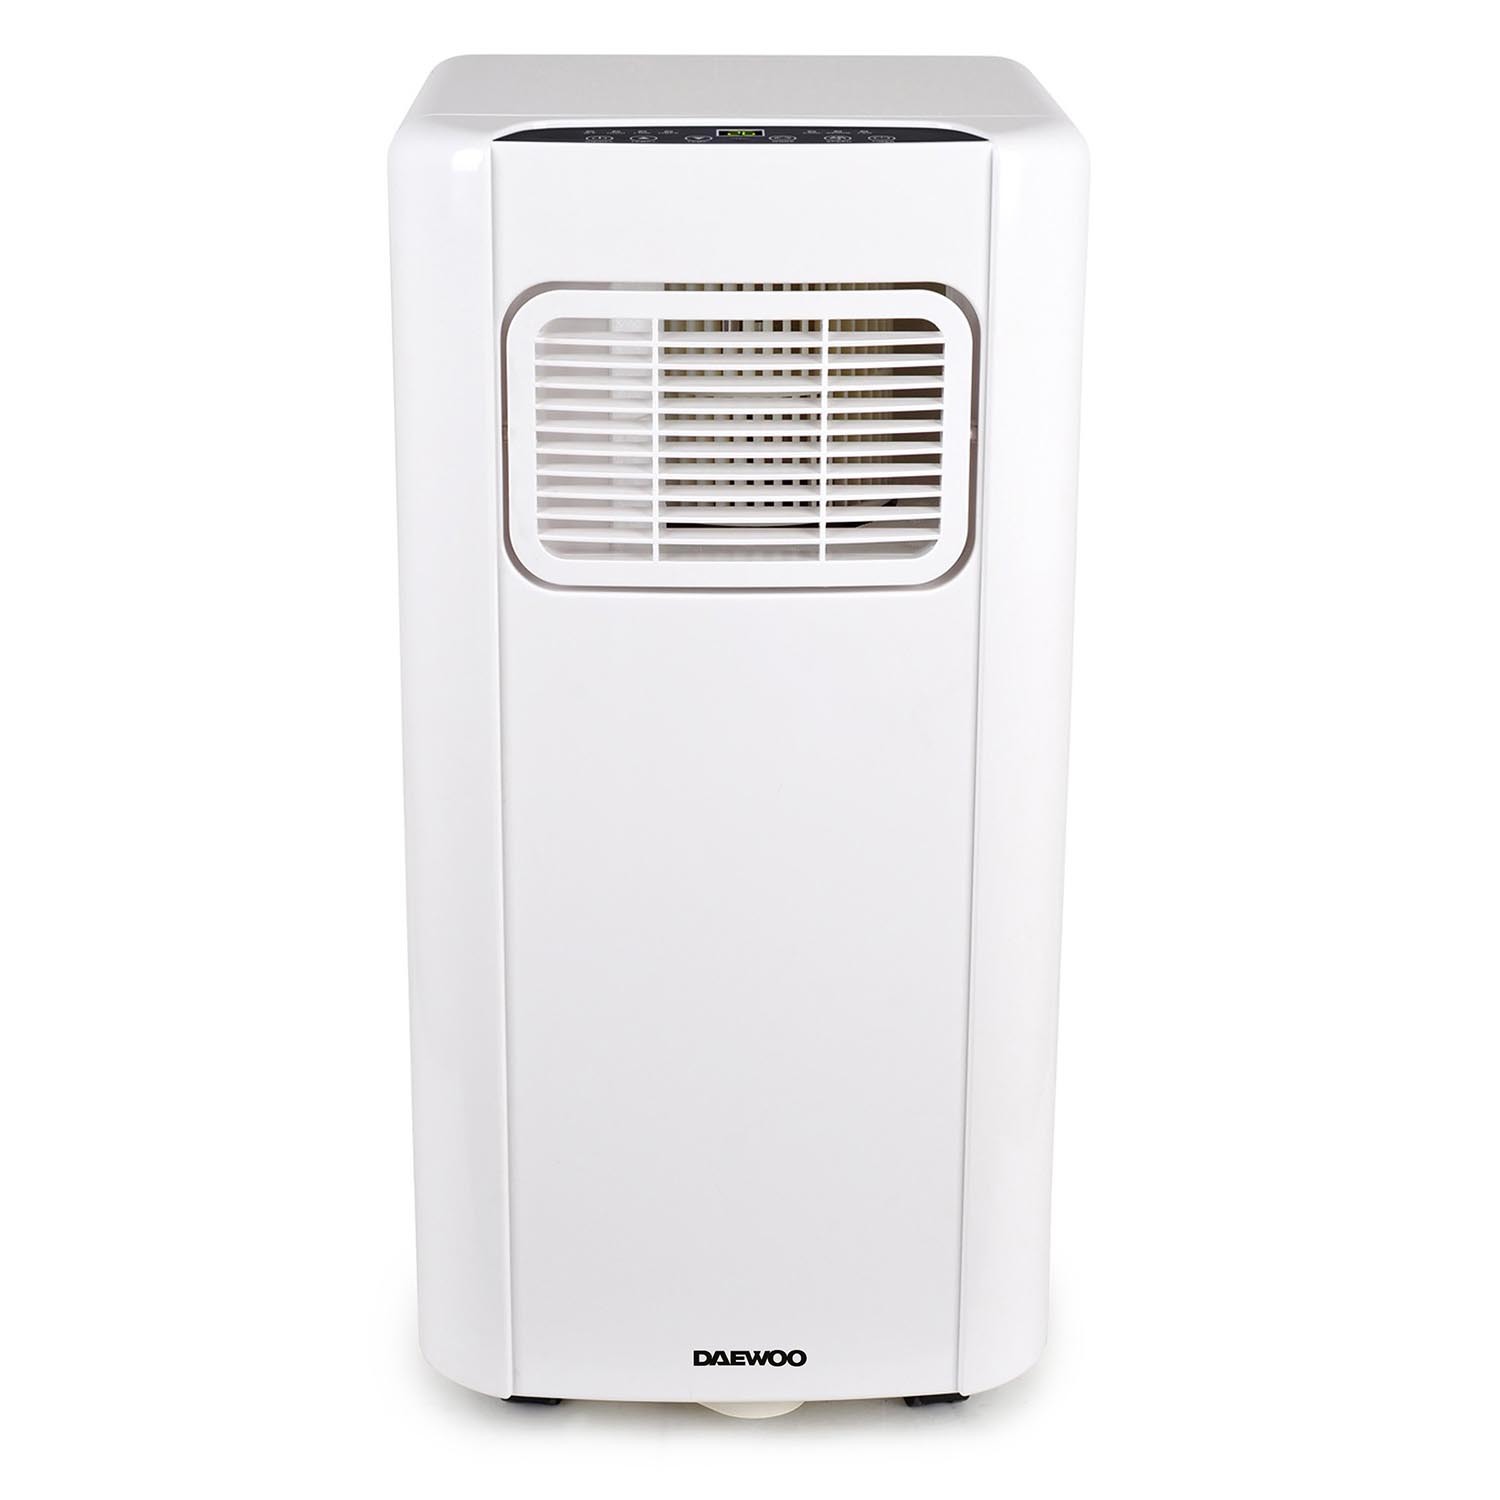 Daewoo Portable Air Conditioning 5000BTU Image 5